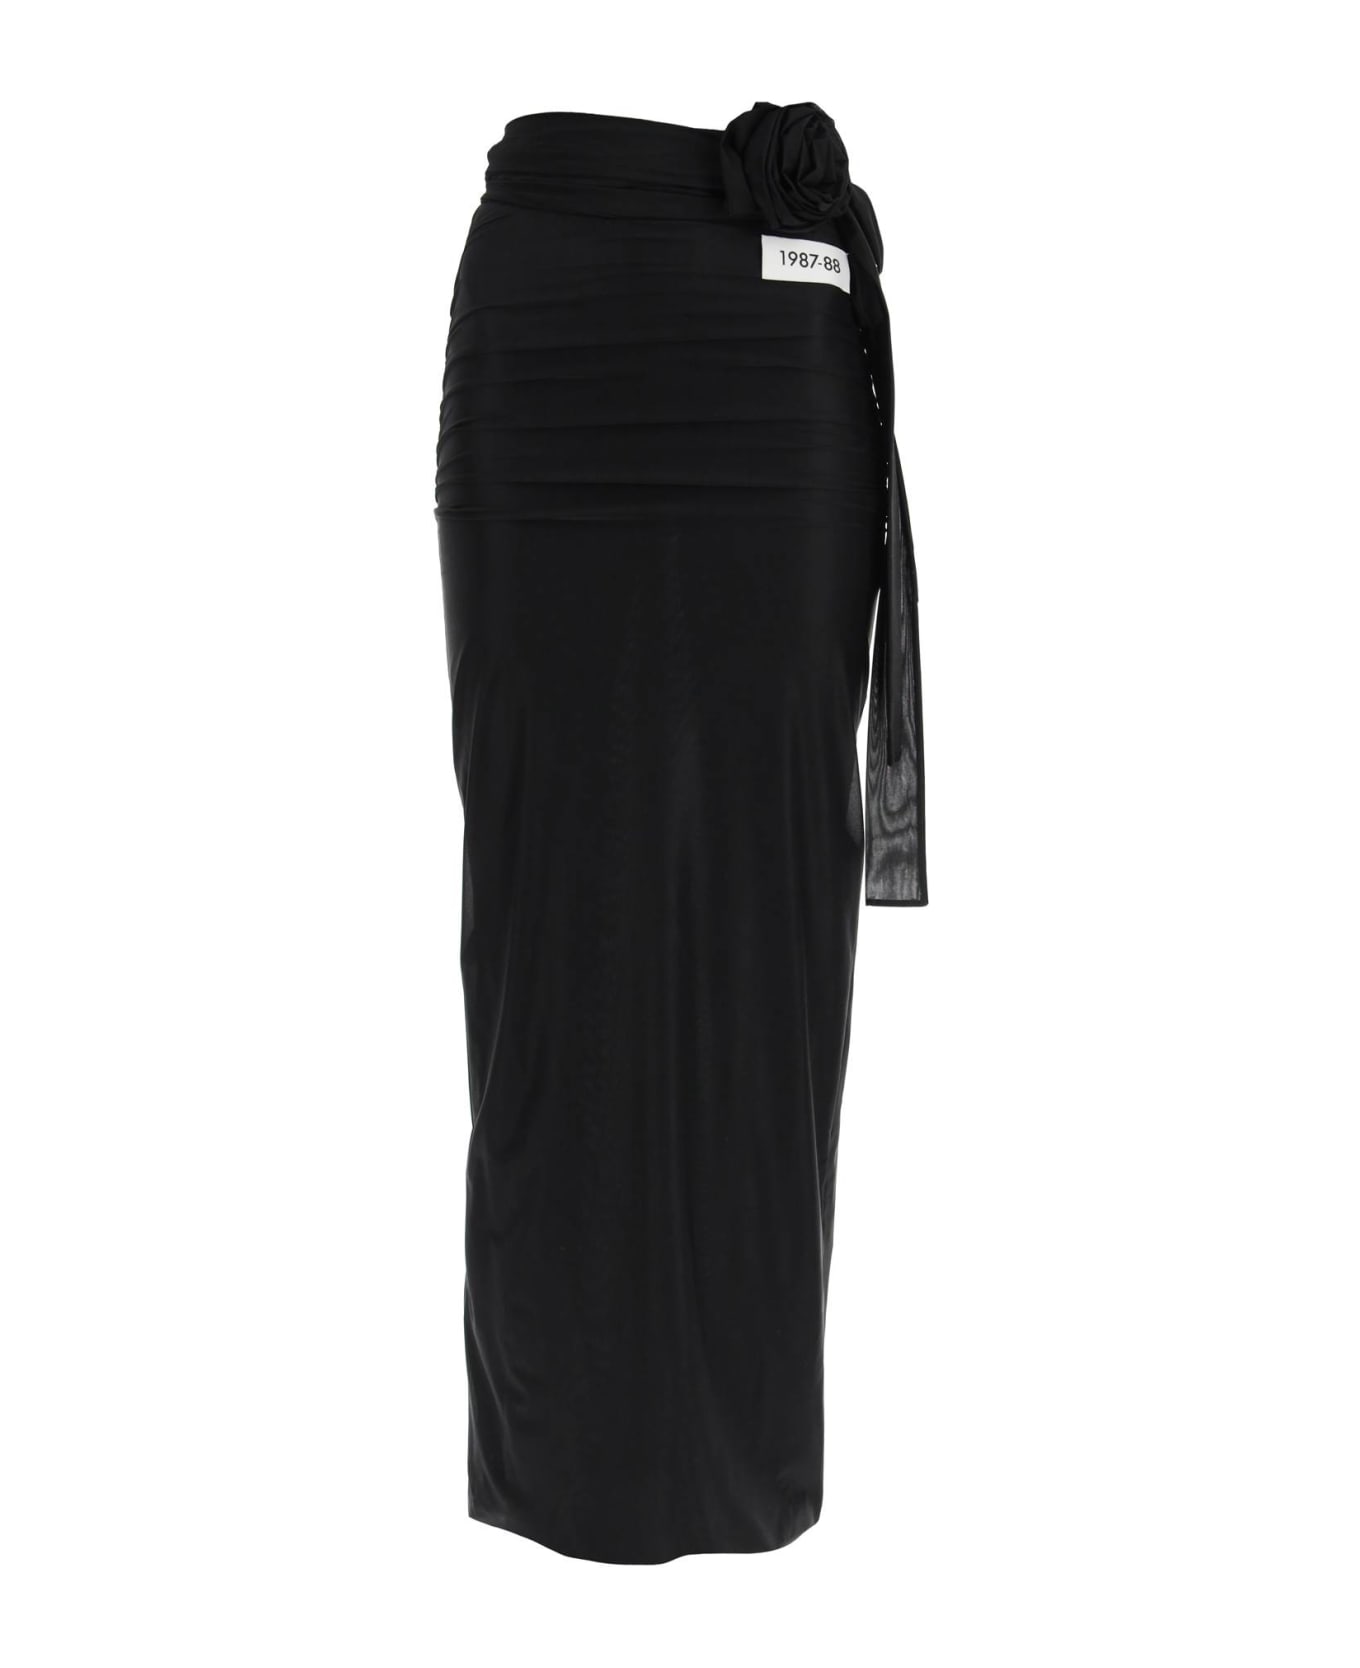 Dolce & Gabbana Jersey Stretch Maxi Skirt - Black スカート